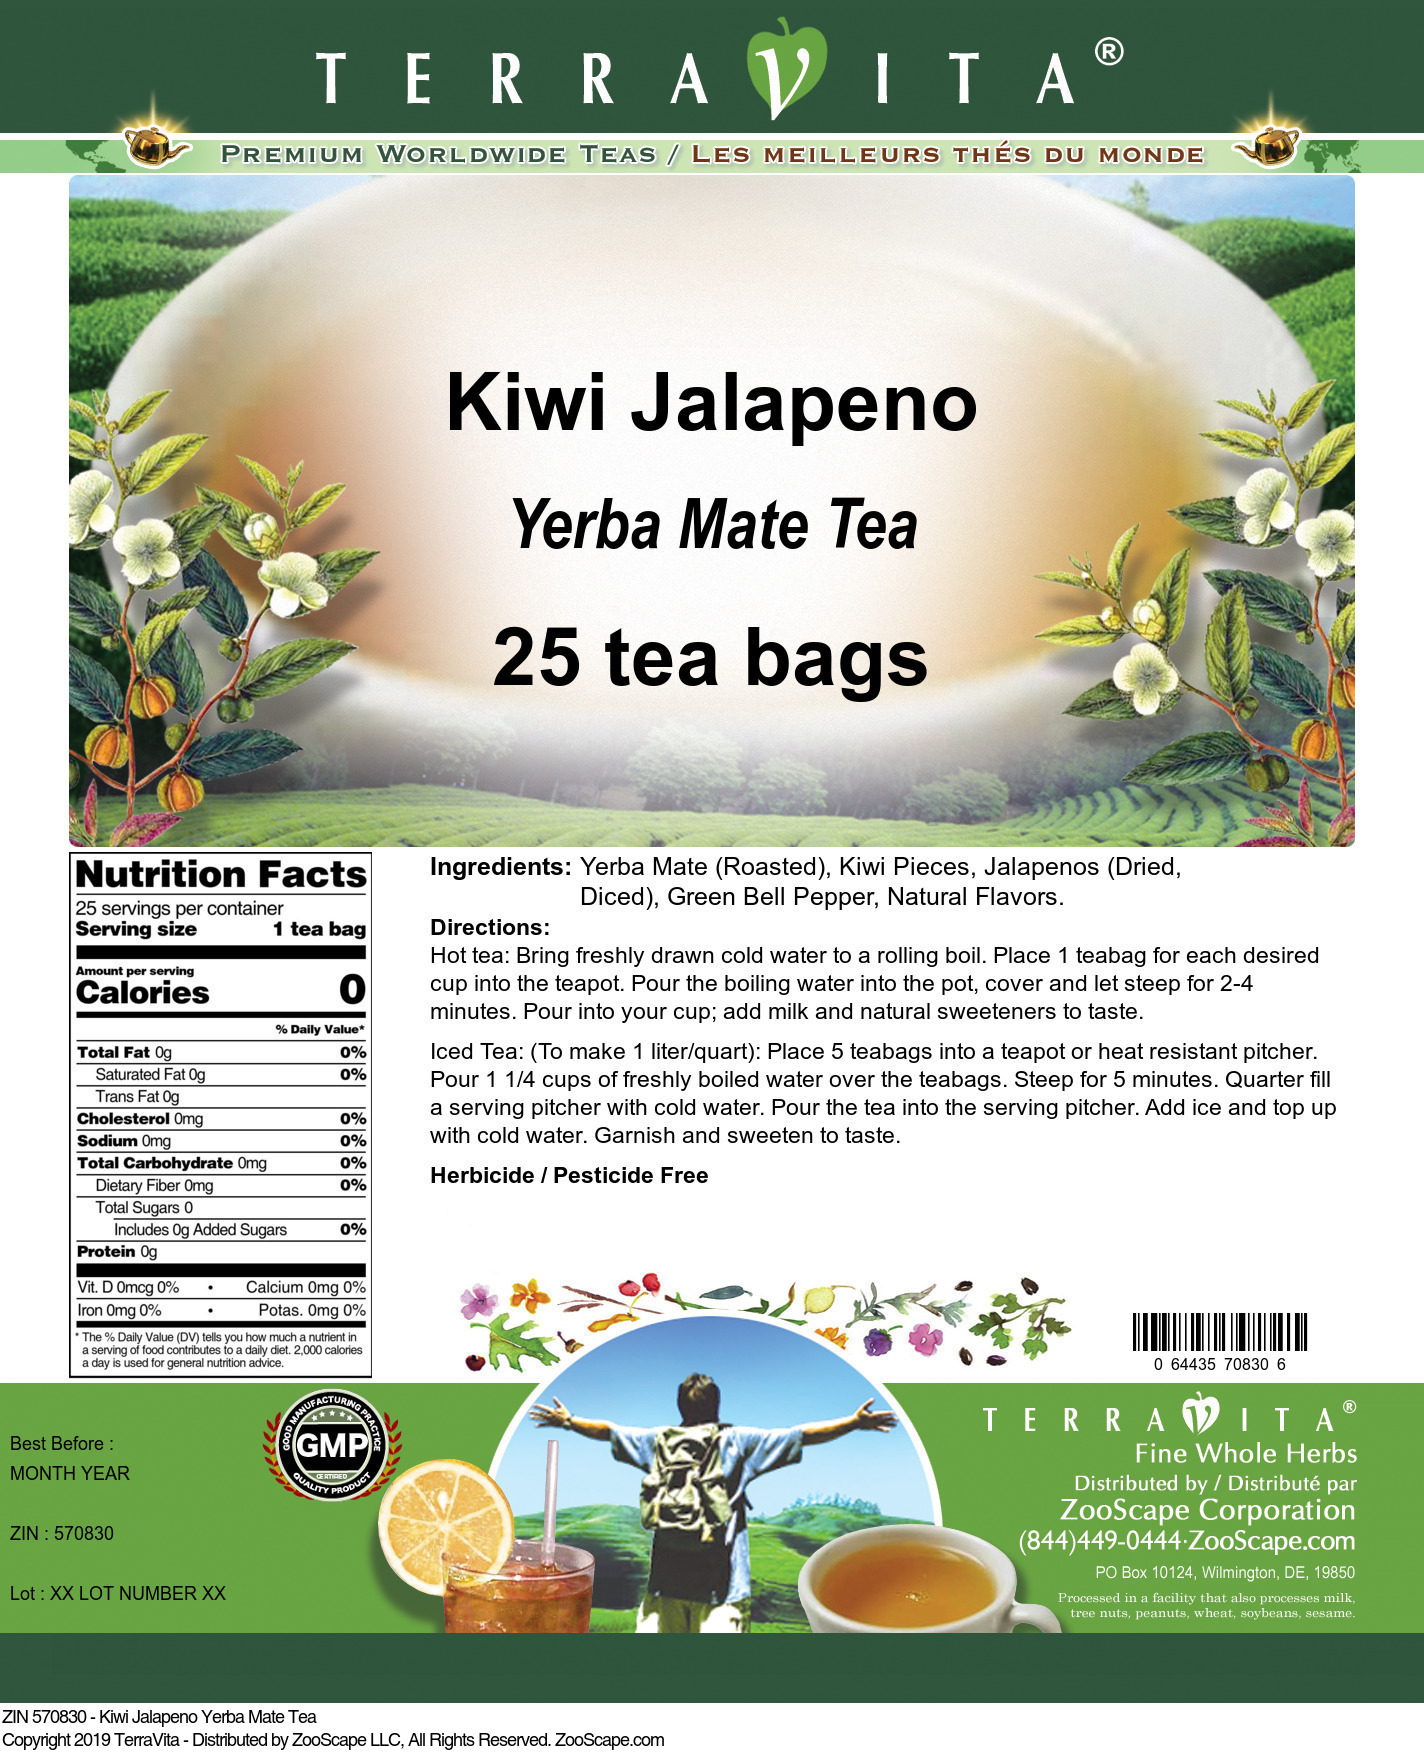 Kiwi Jalapeno Yerba Mate Tea - Label